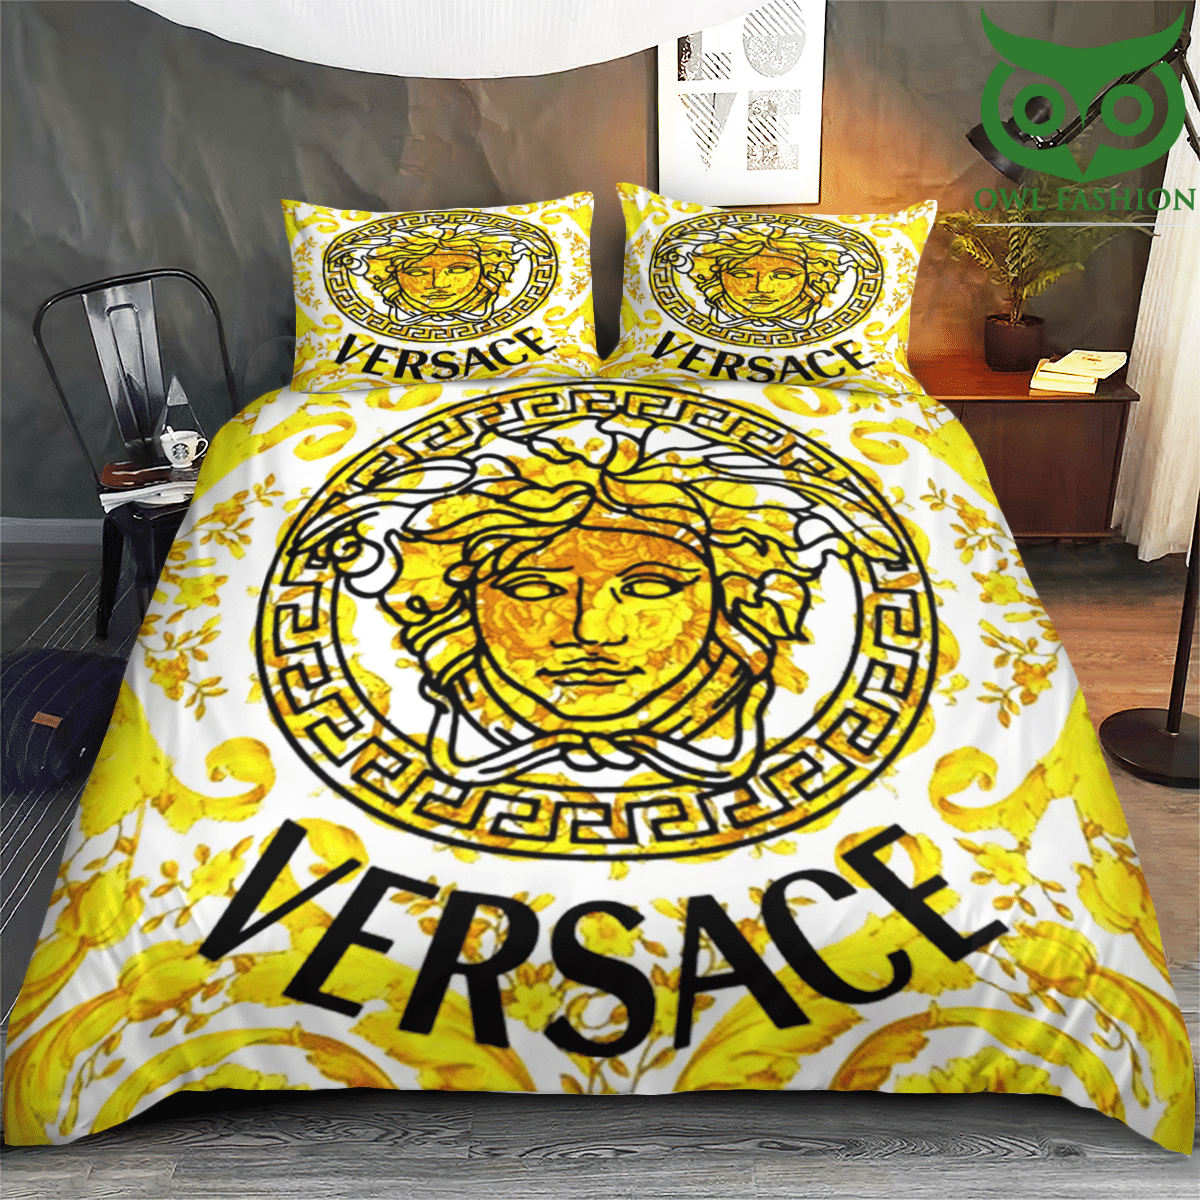 PREMIUM Yellow flower pattern Versace bedding set